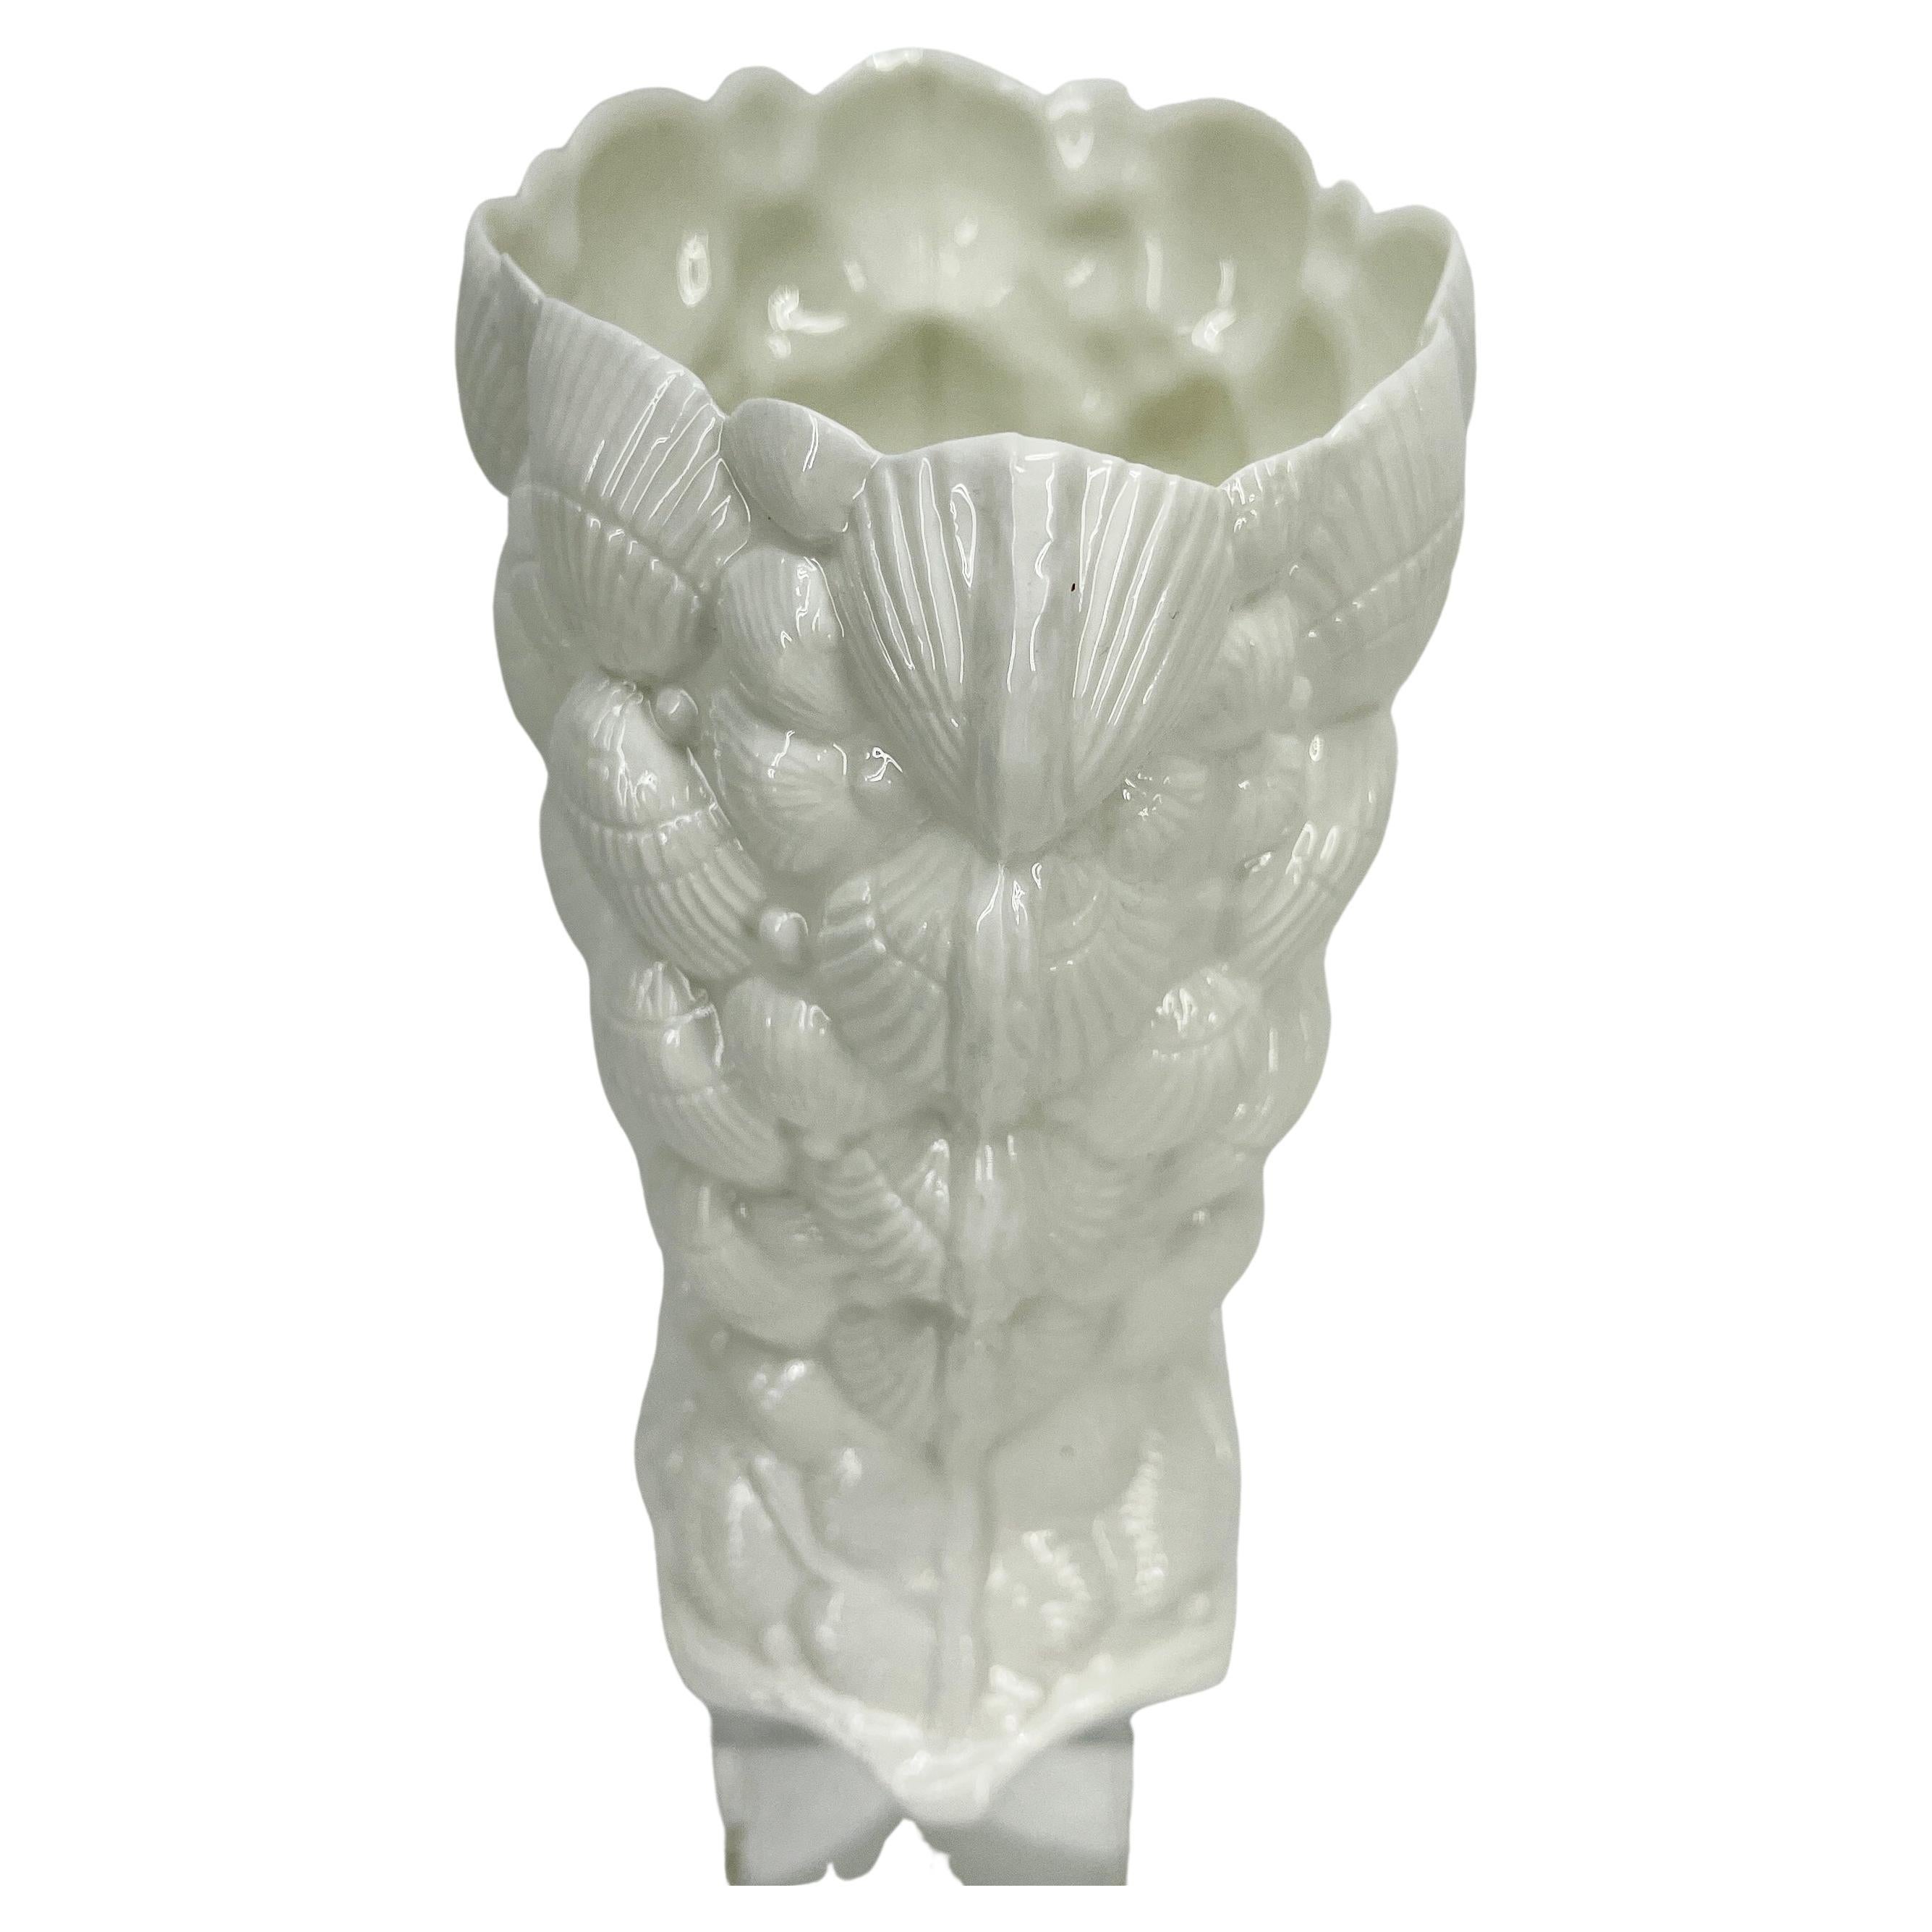 Molded Vintage Tiffany Seashell Vase by Sybil Connolly, White Porcelain